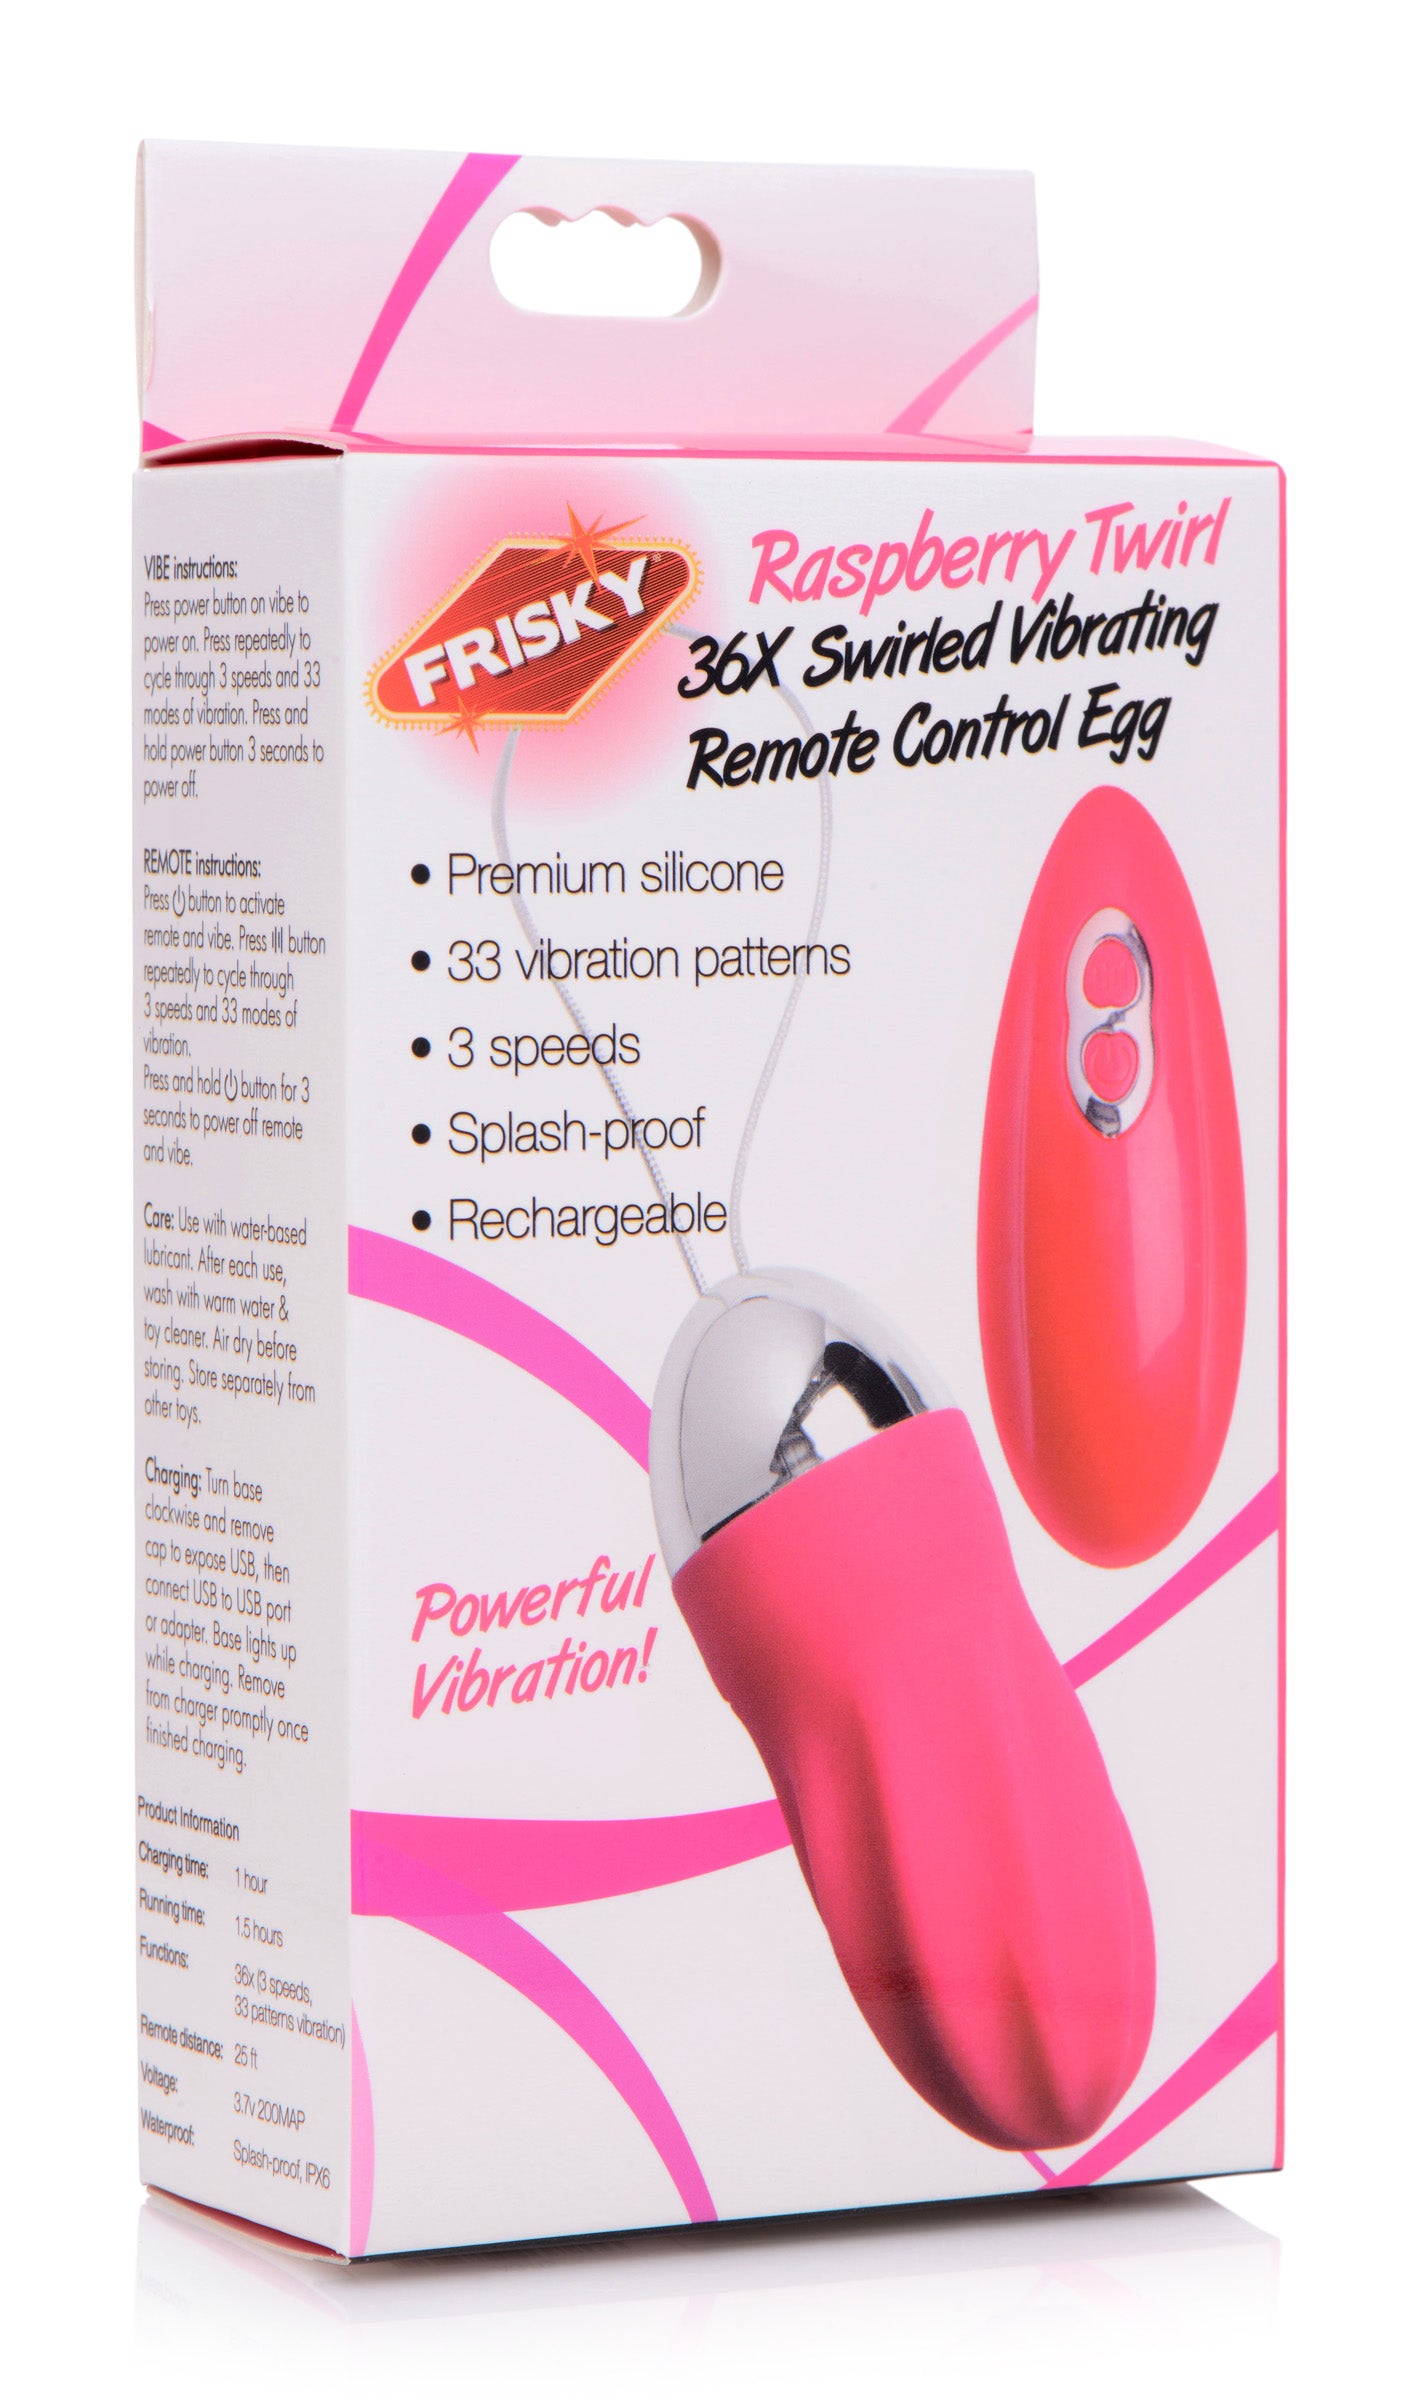 36X Swirled Vibrating Remote Control Egg